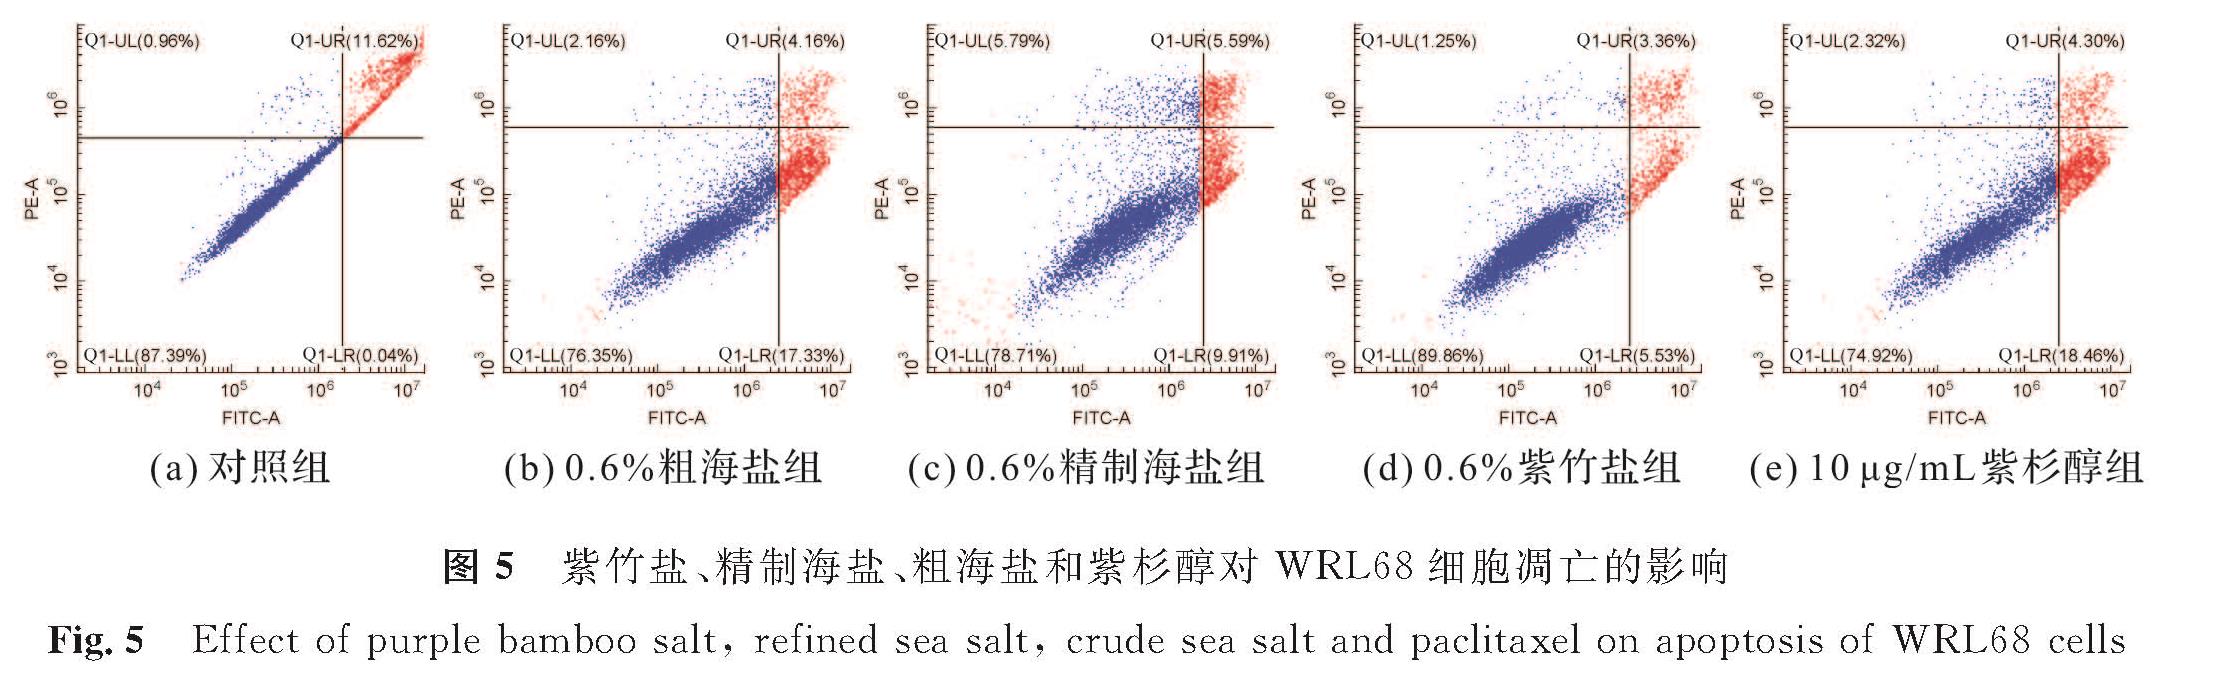 图5 紫竹盐、精制海盐、粗海盐和紫杉醇对WRL68细胞凋亡的影响<br/>Fig.5 Effect of purple bamboo salt, refined sea salt, crude sea salt and paclitaxel on apoptosis of WRL68 cells